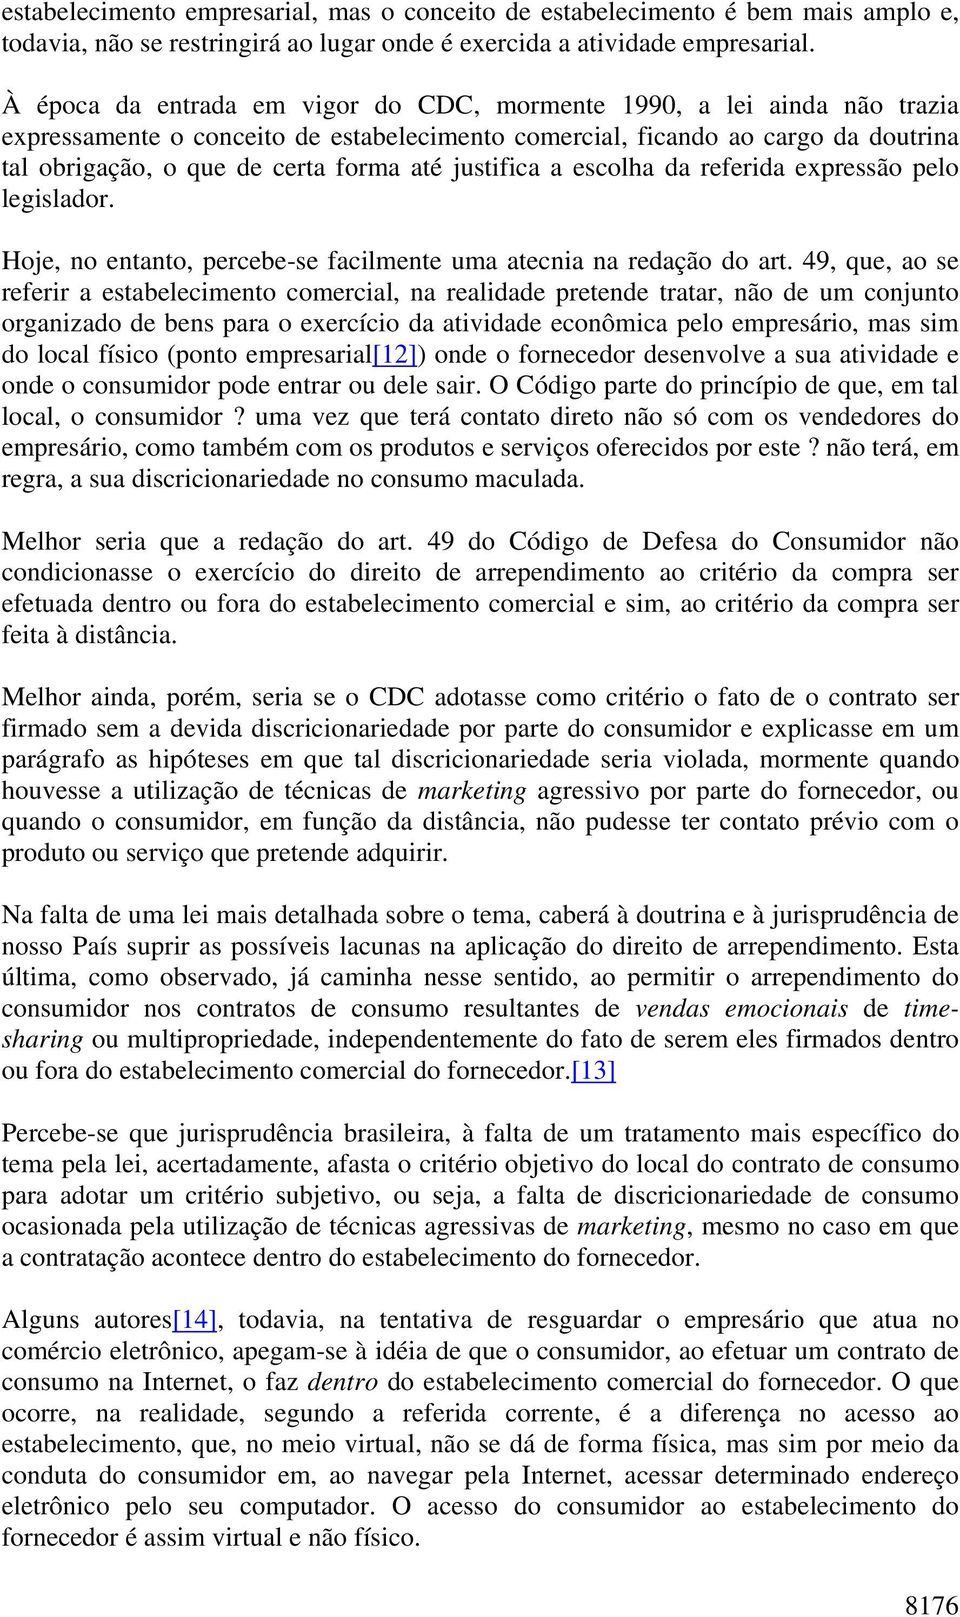 E-COMMERCE E O DIREITO DE ARREPENDIMENTO * E-COMMERCE AND THE RIGHT TO  RETURN UNWANTED MERCHANDISE - PDF Download grátis